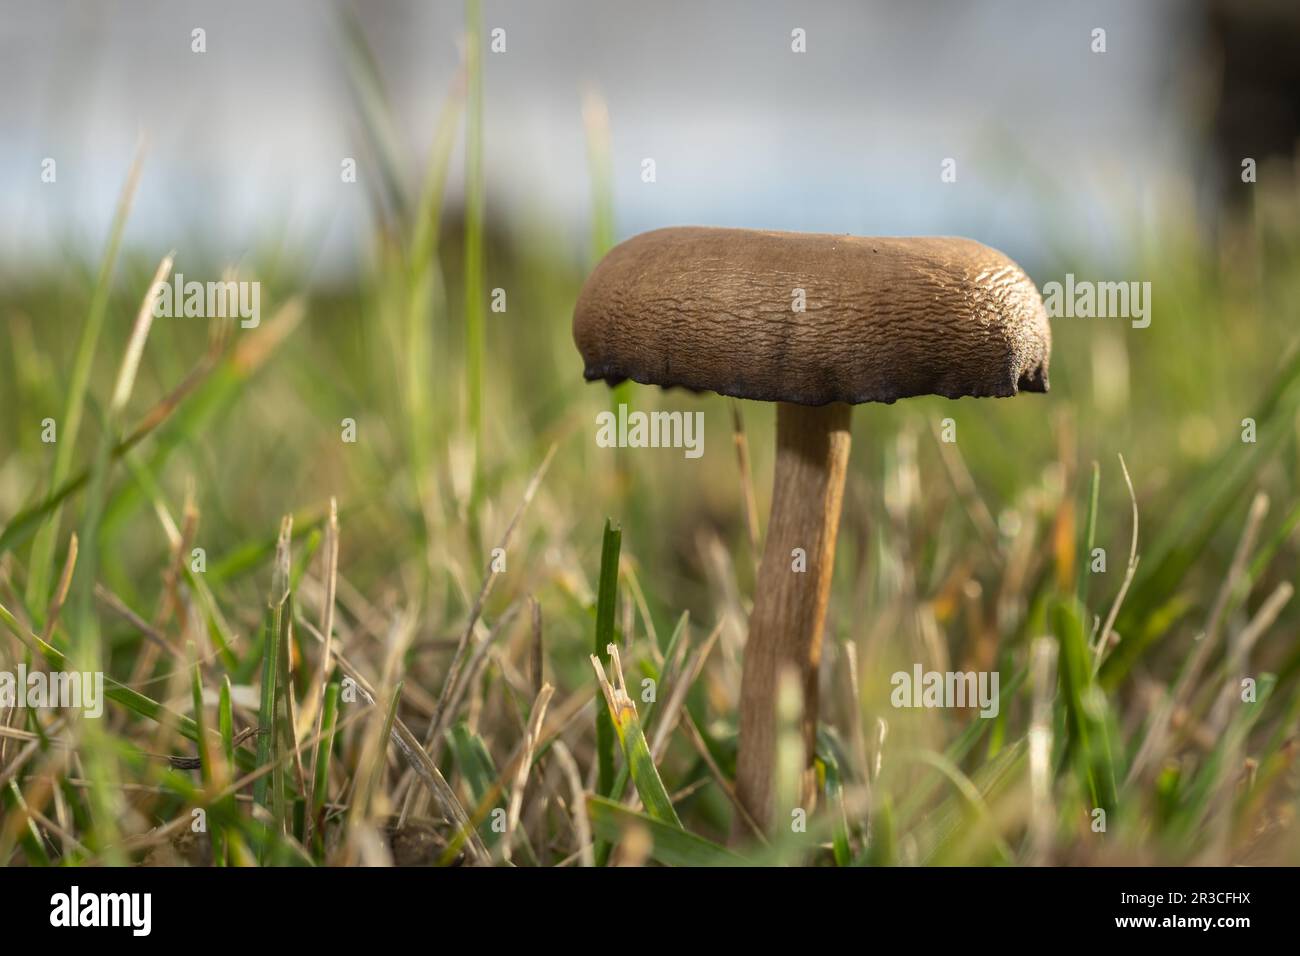 Small mushroom in the garden Stock Photo